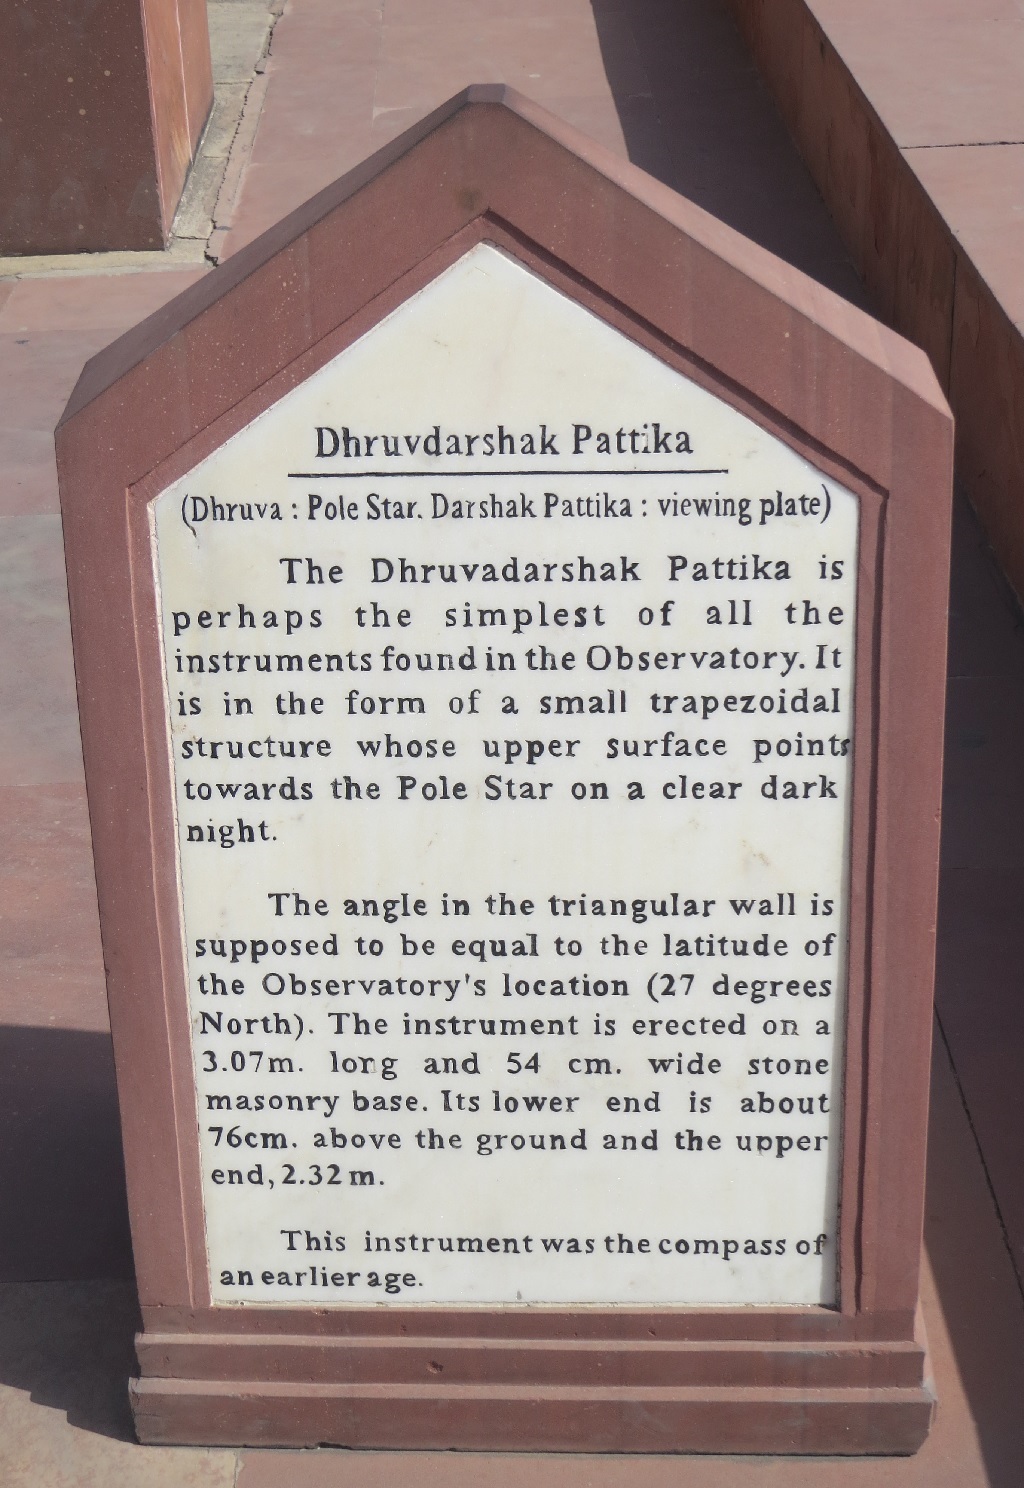 About: Dhruvdarshak Pattika – Pole Star Viewing Plate